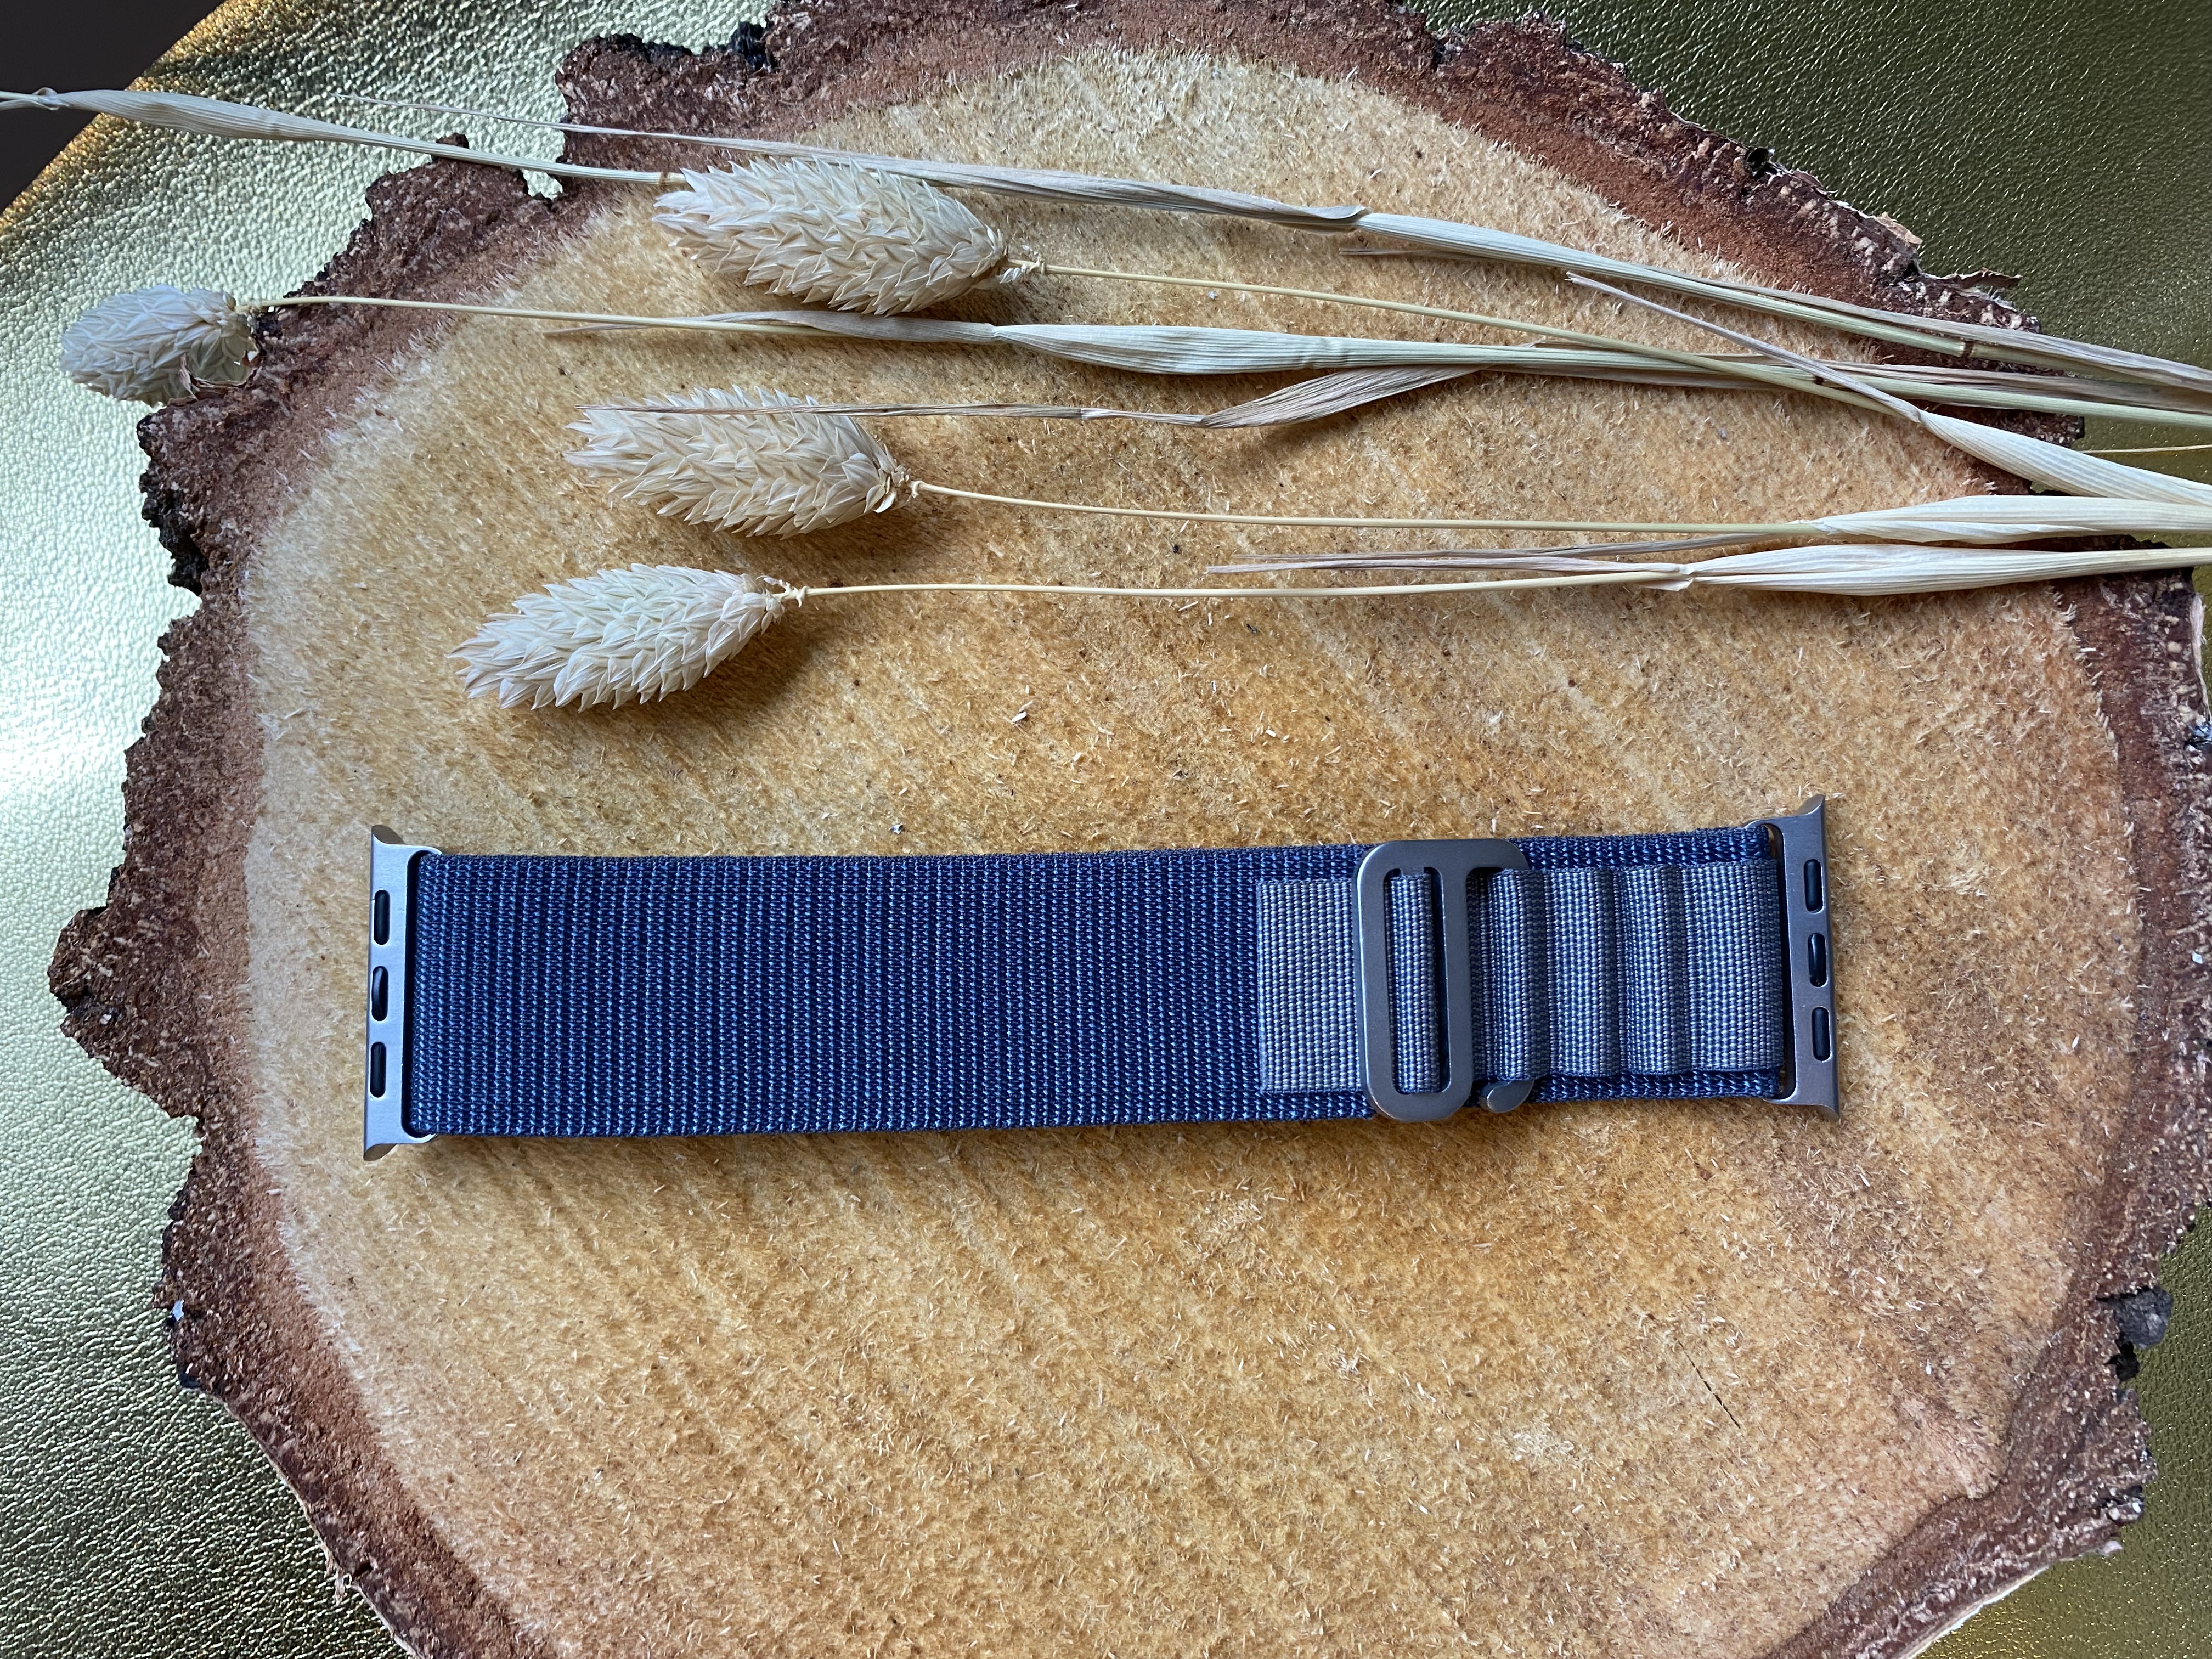 Cinturino Alpine in nylon per Apple Watch - blu